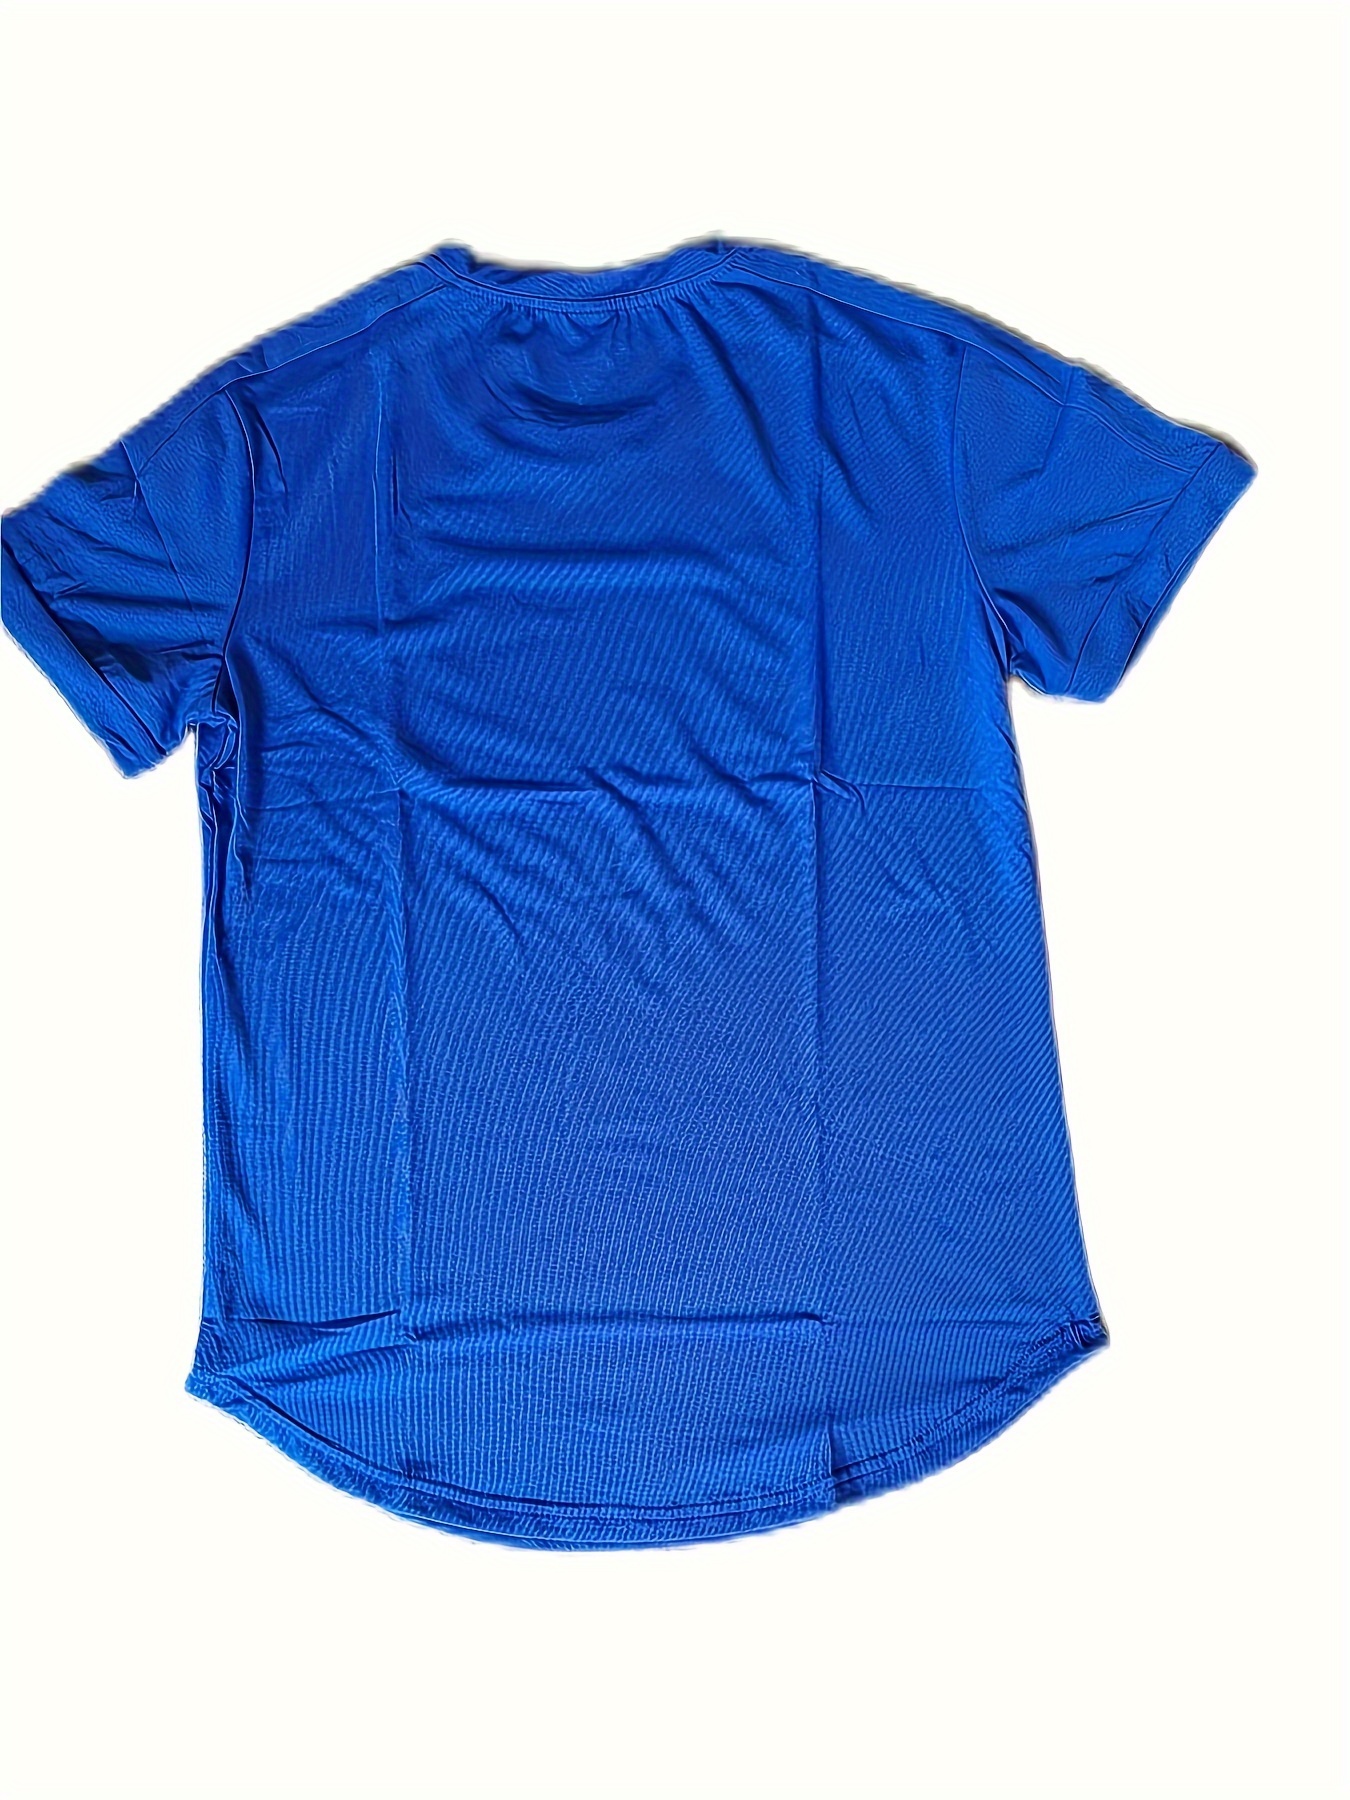 Men's Short Sleeve Dri-Fit Hiking Shirt